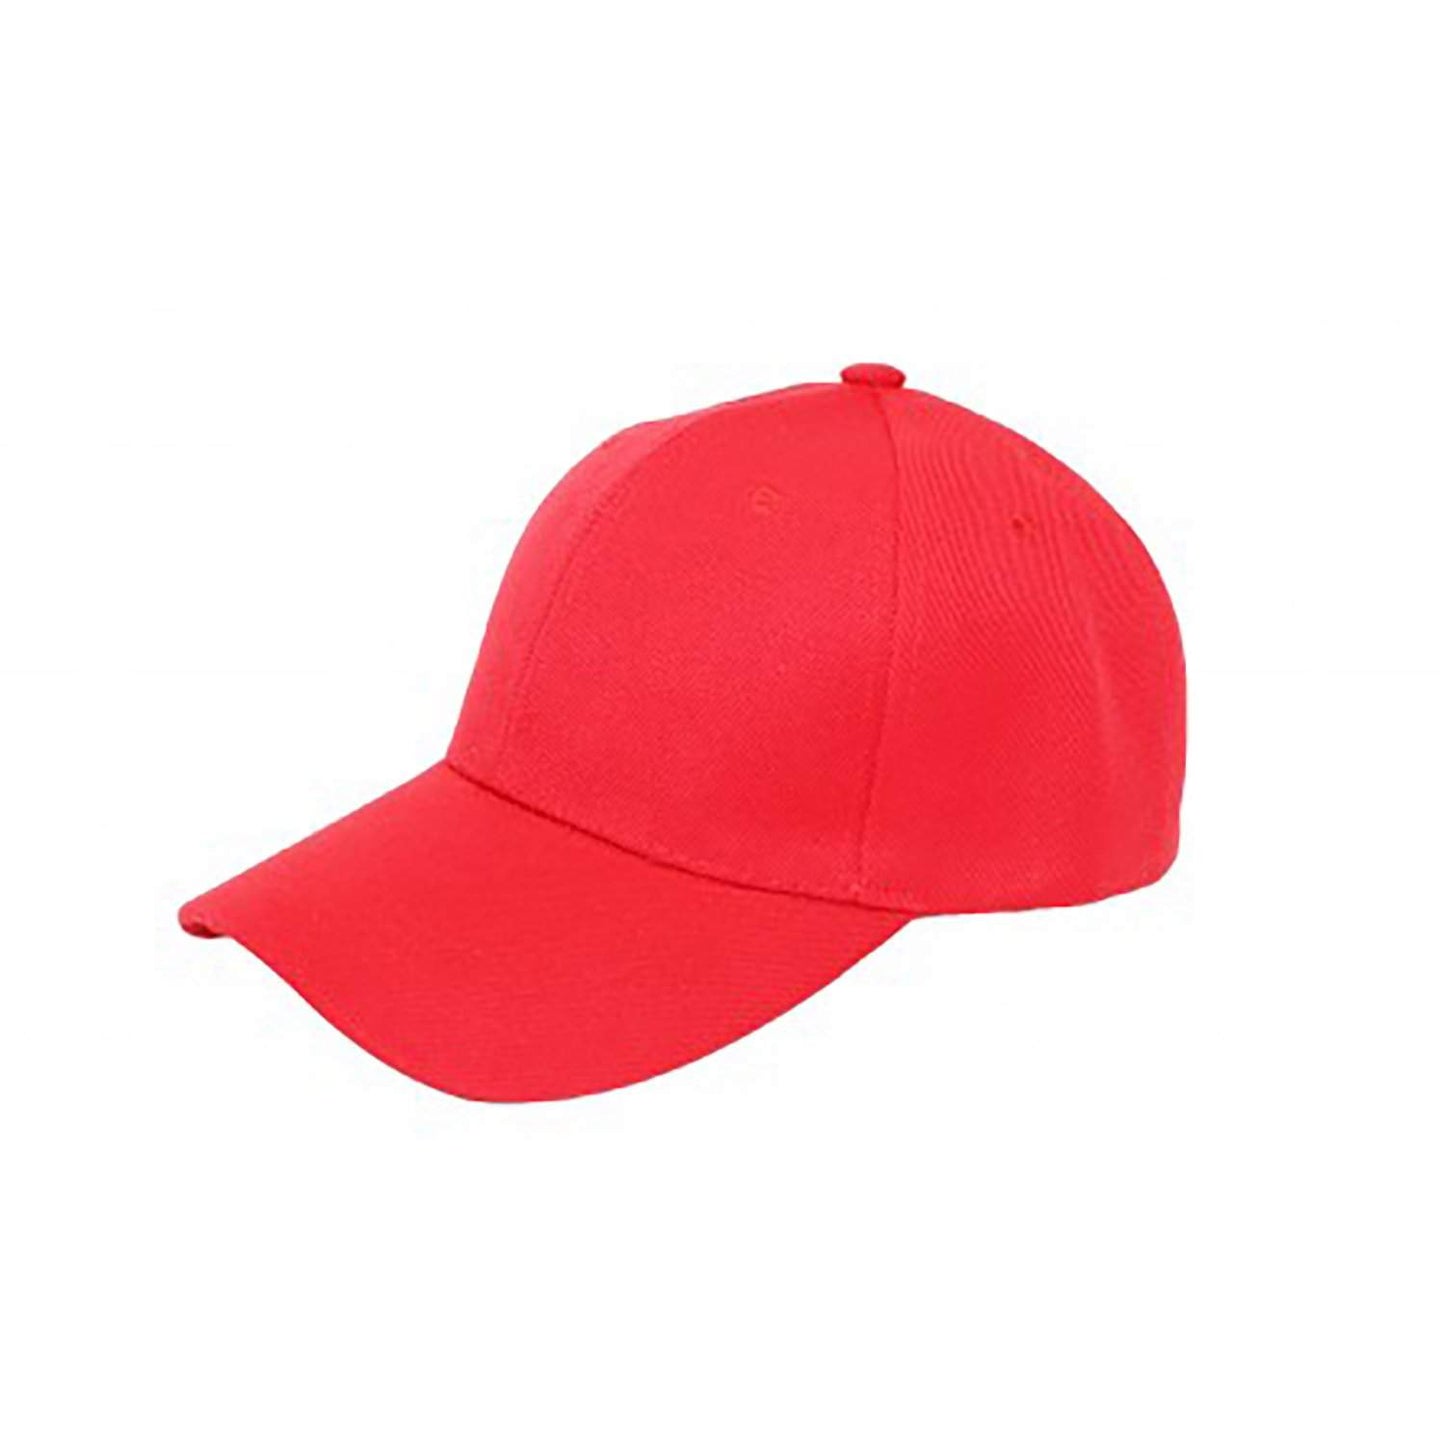 Balec Plain Baseball Cap Hat Adjustable Back